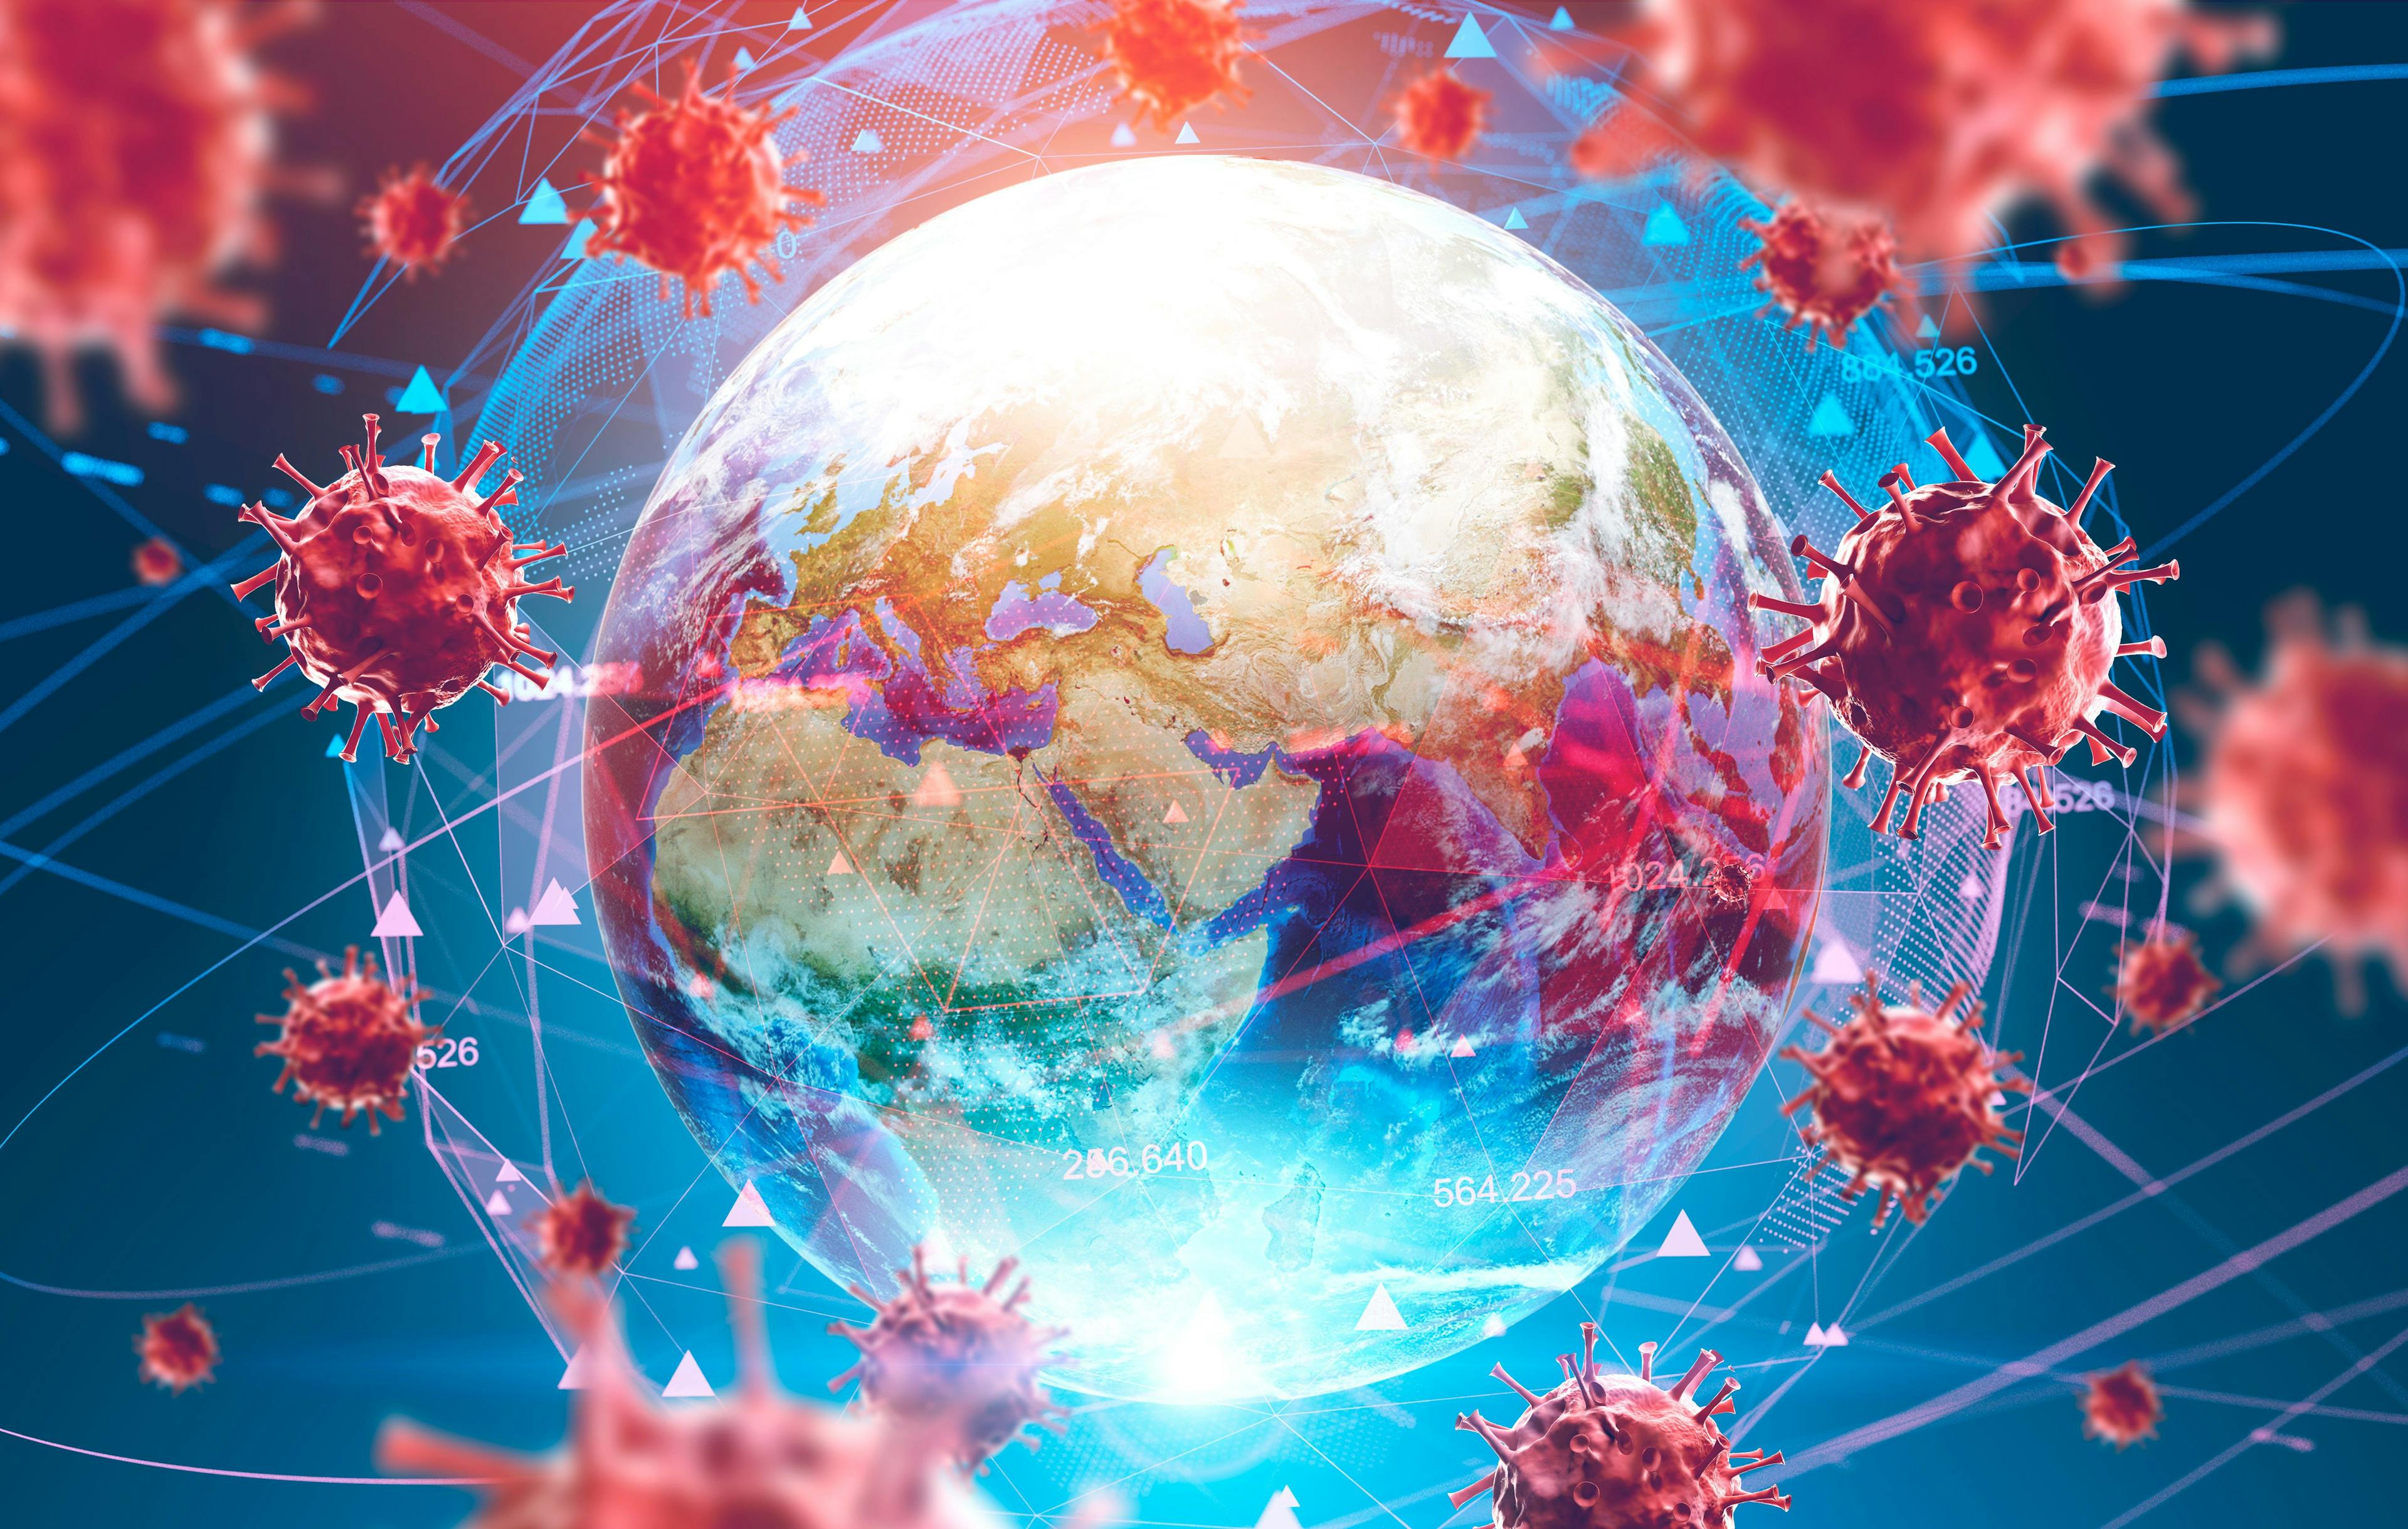 Coronavirus News Roundup: Guidance Allows Pharmacist Testing, Acceleration of Treatments, CDC Reports